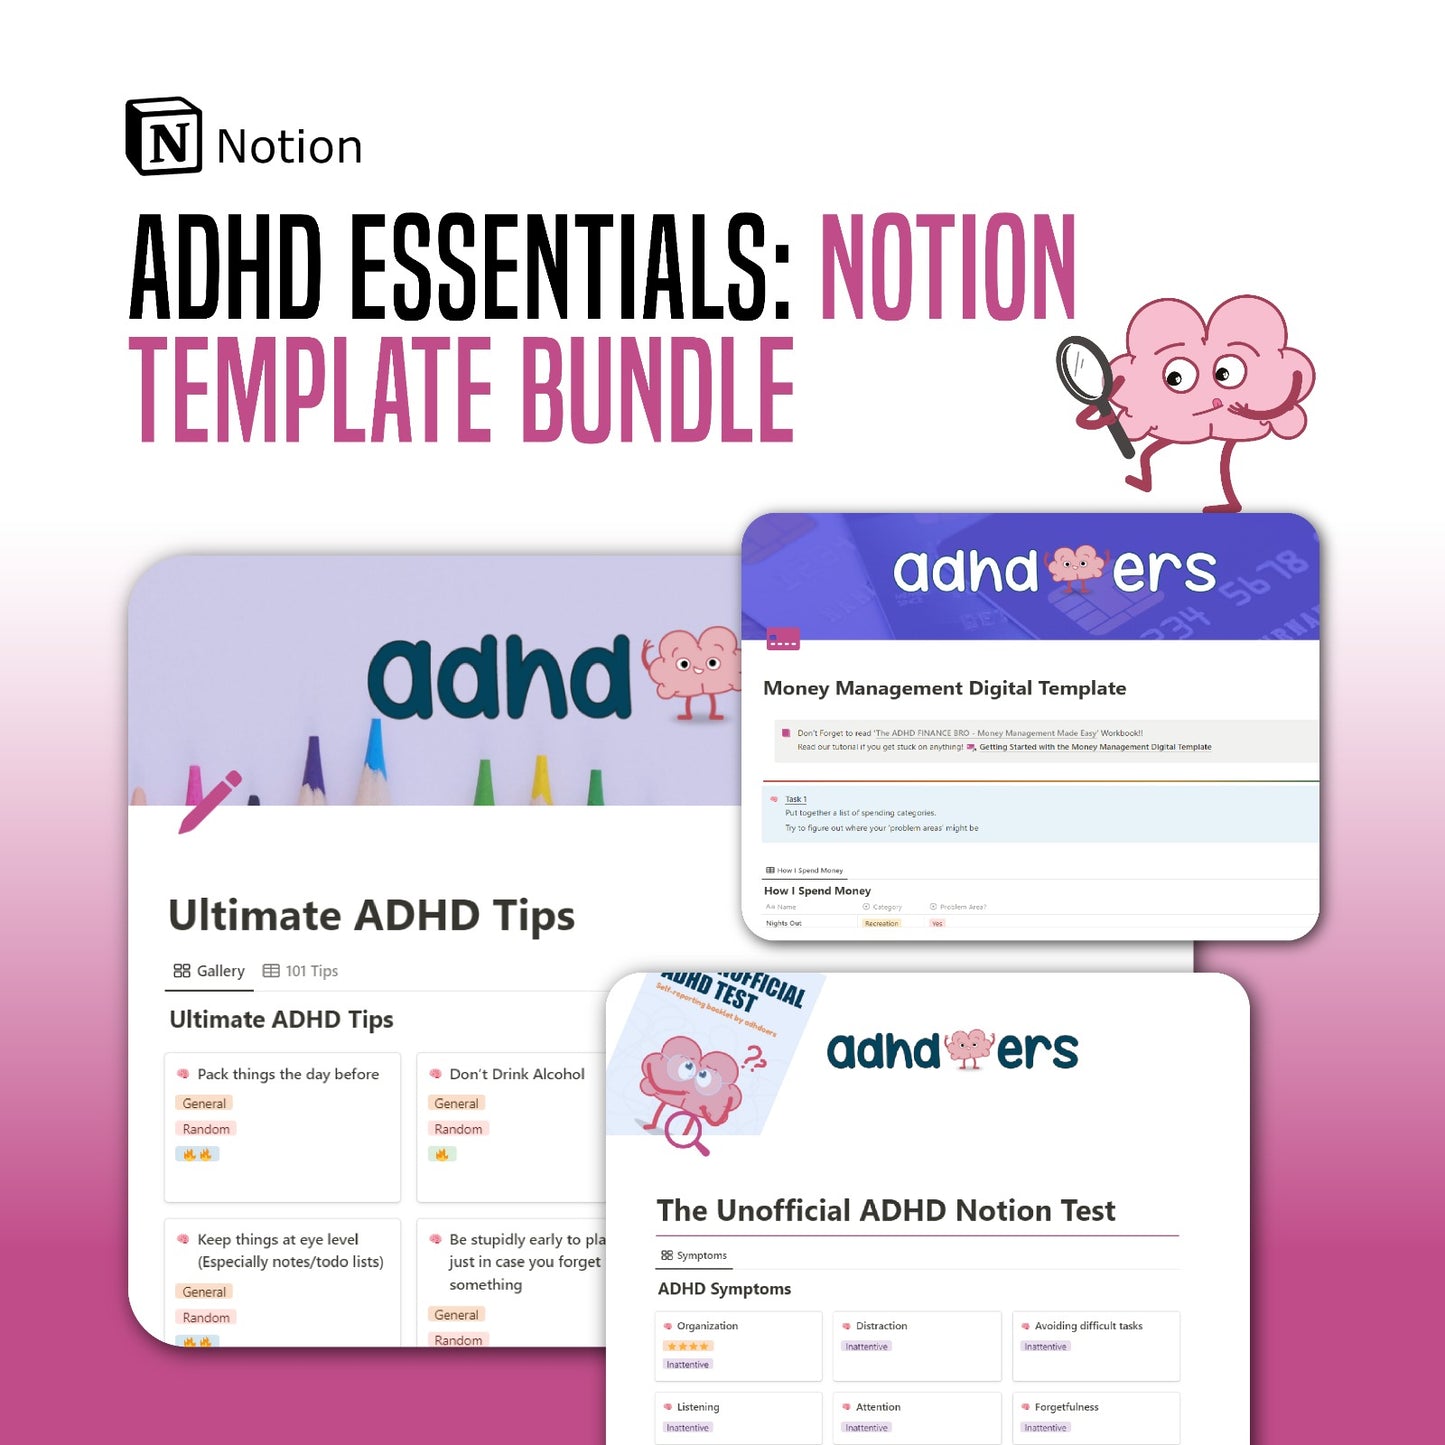 ADHD Essentials : Notion Template Bundle